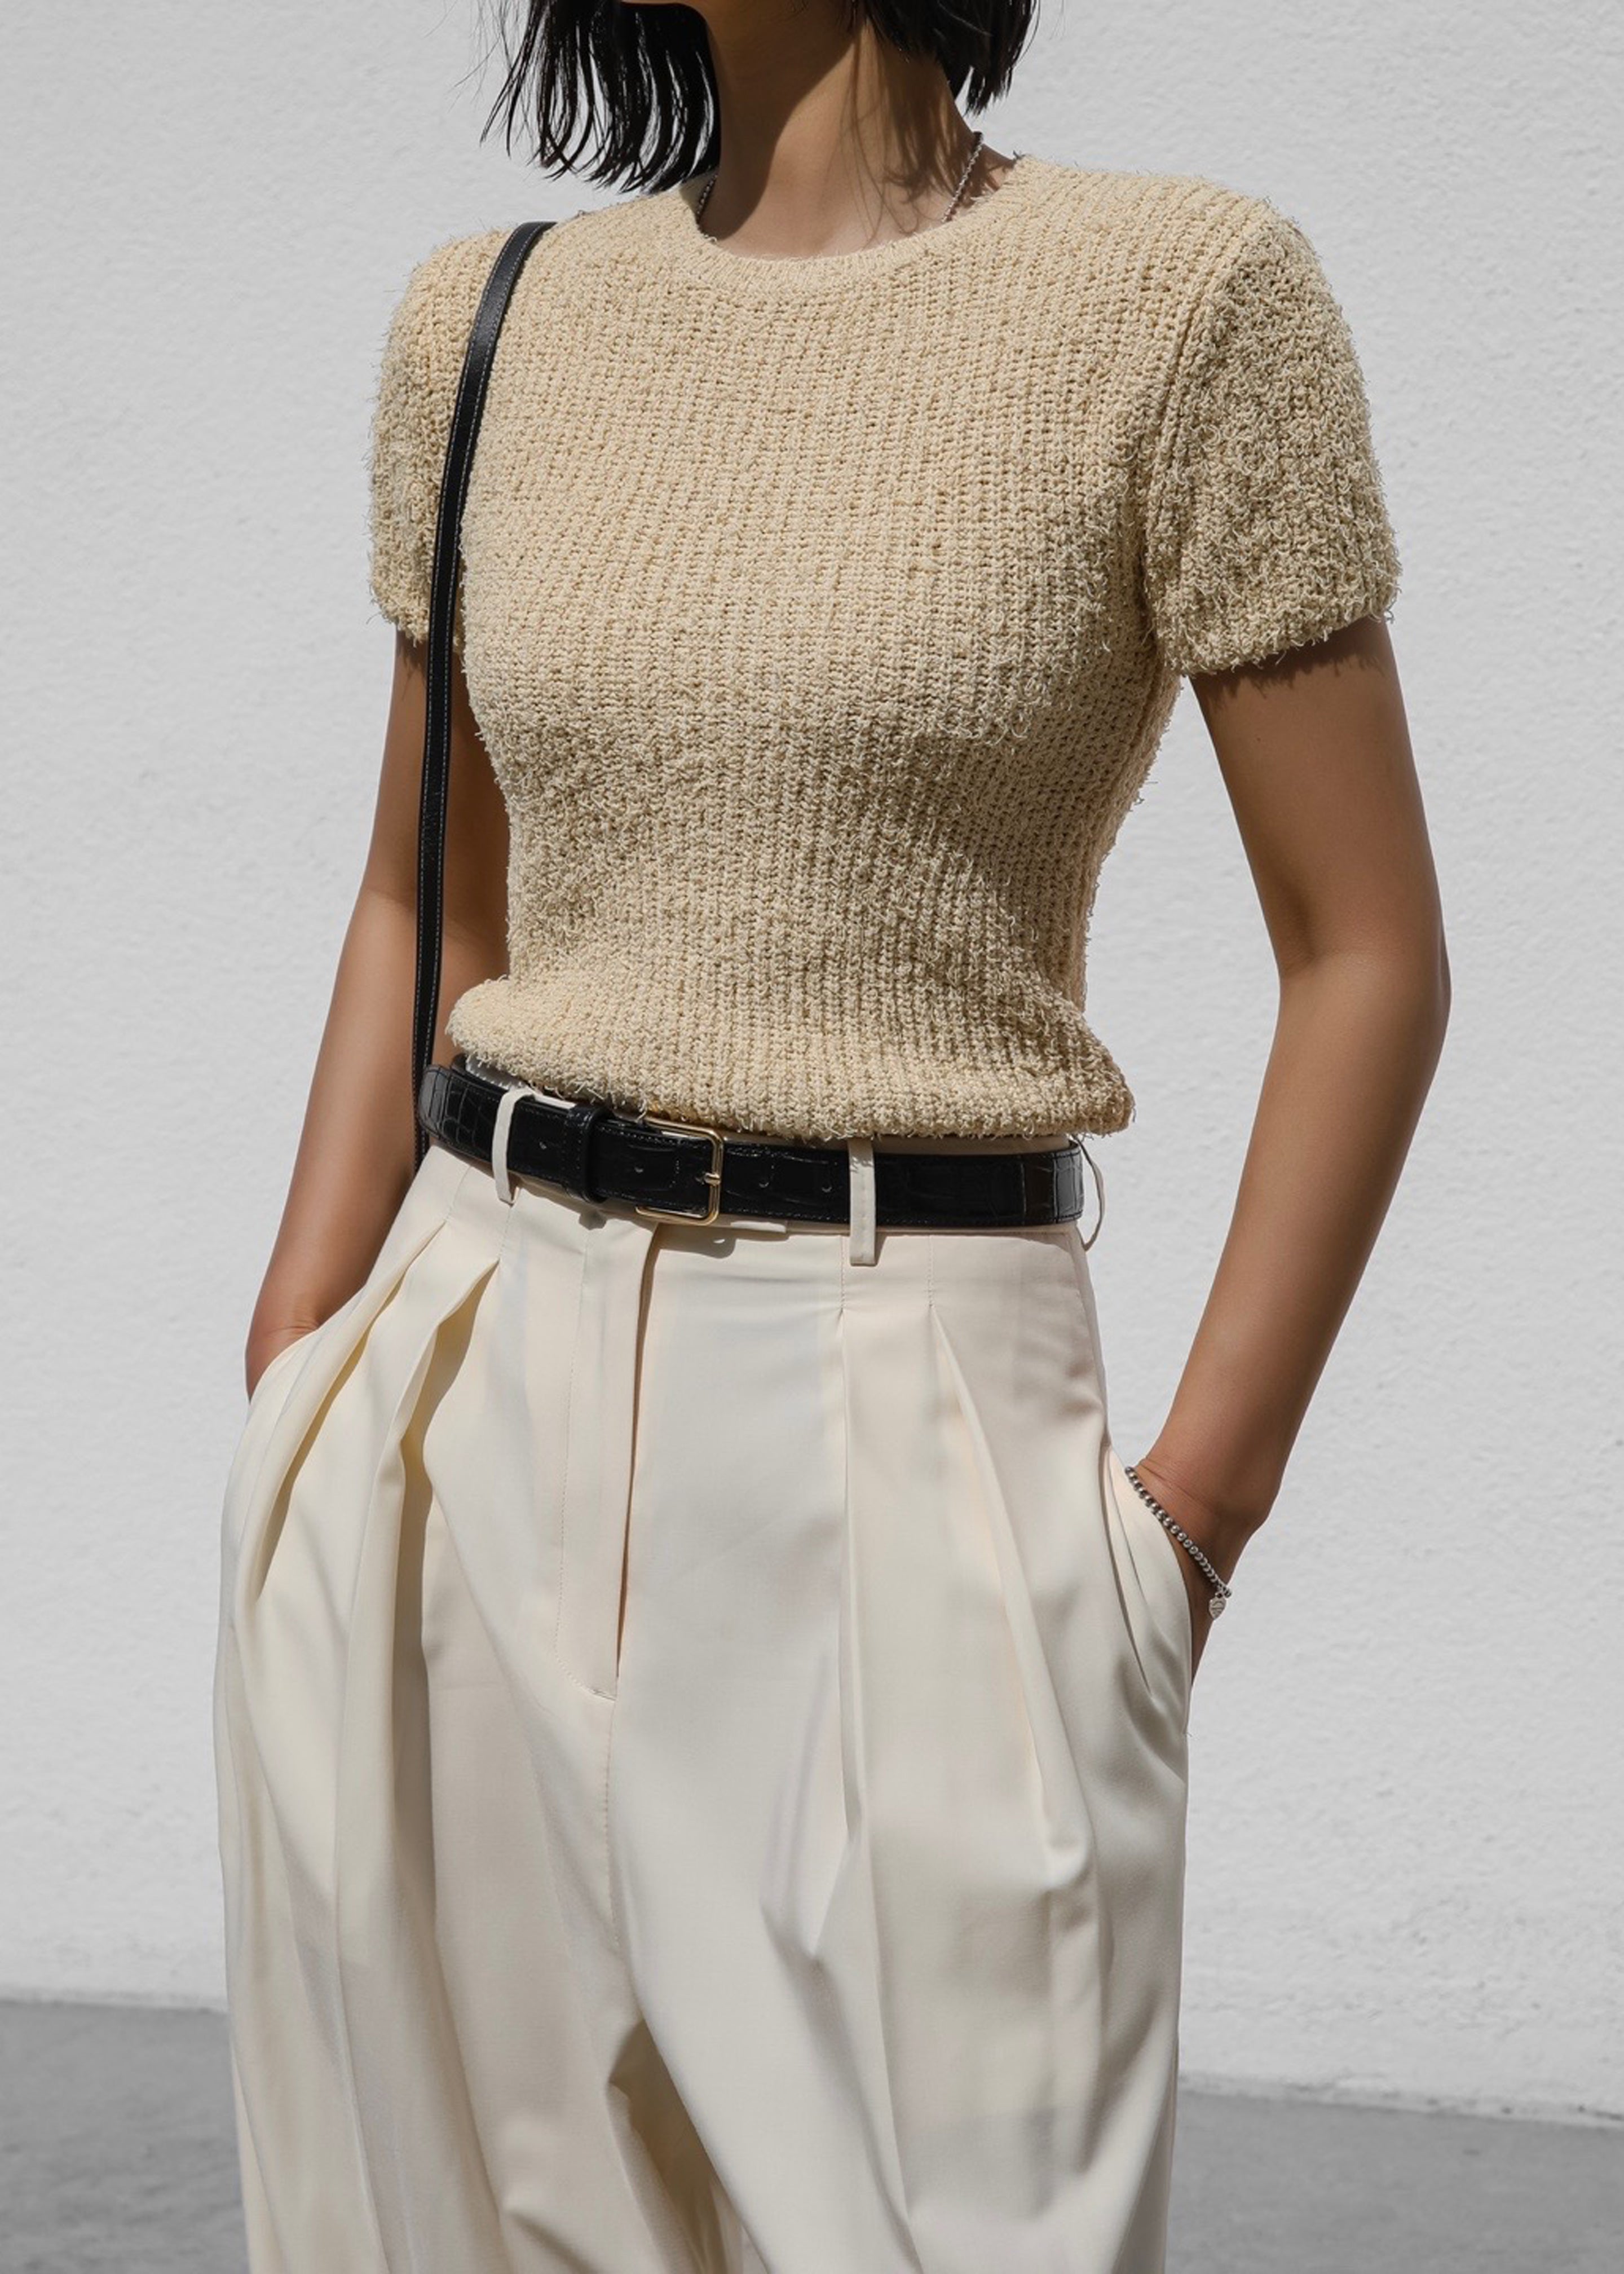 Lexie Knit Cropped Top - Beige - 3